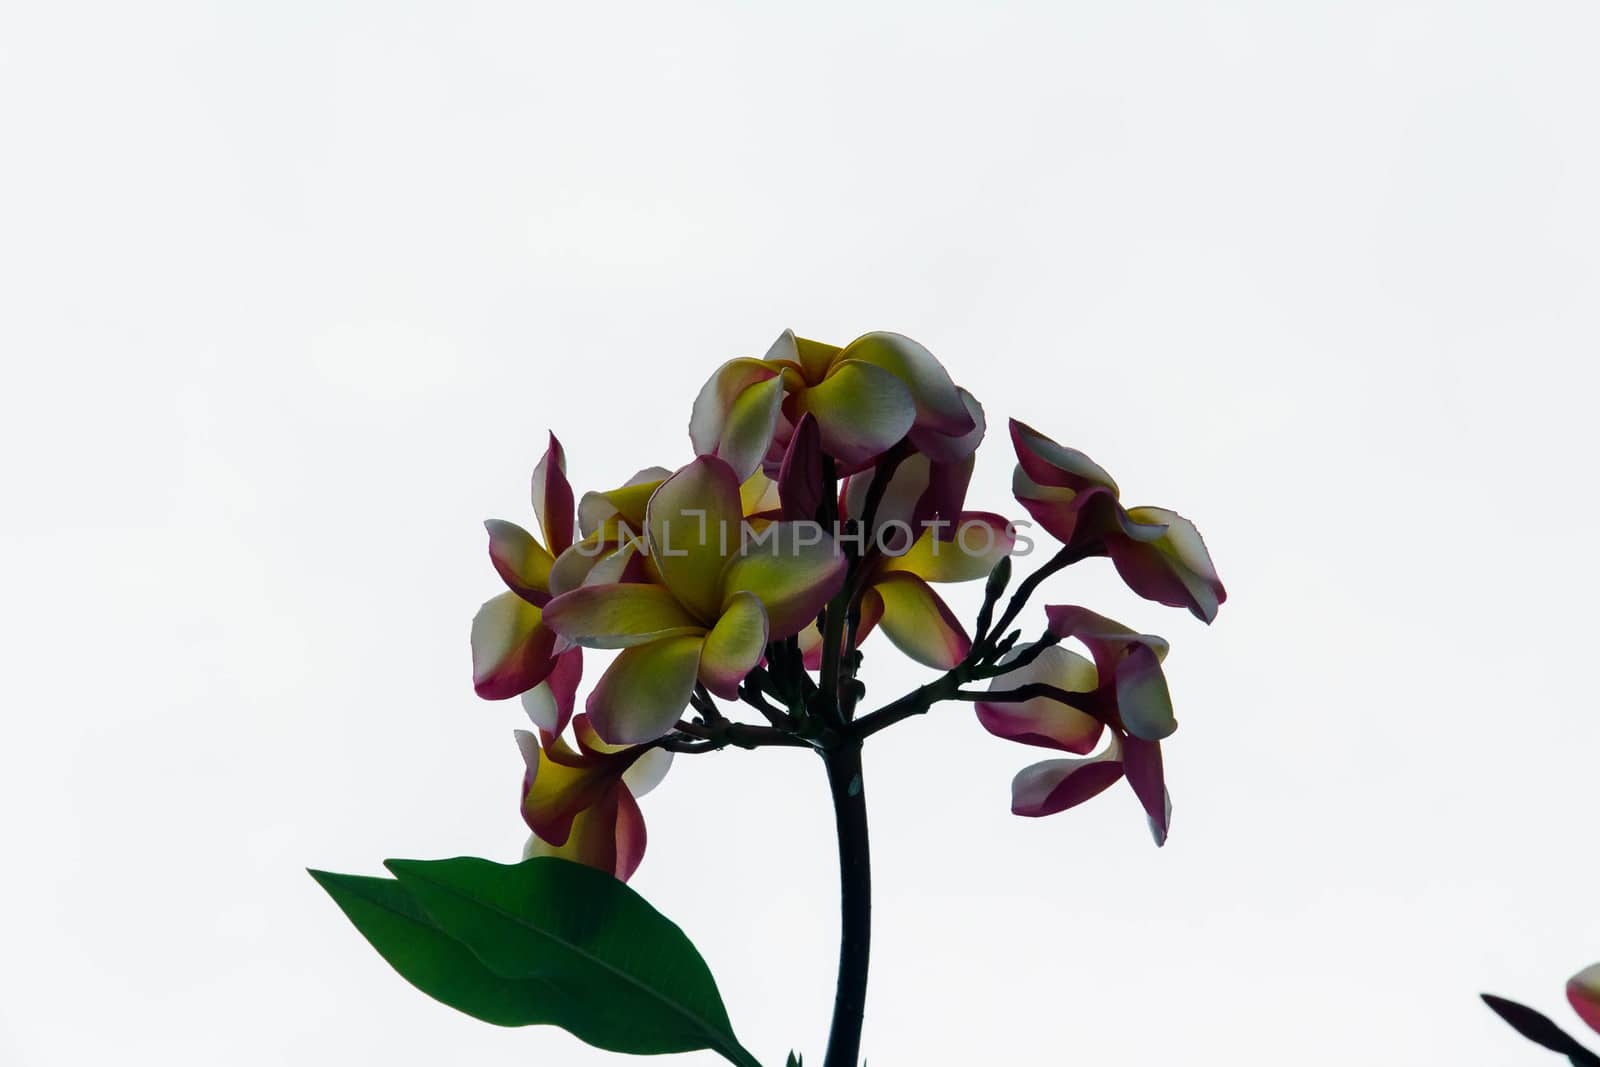 Frangipani flowers background blurred by STZU